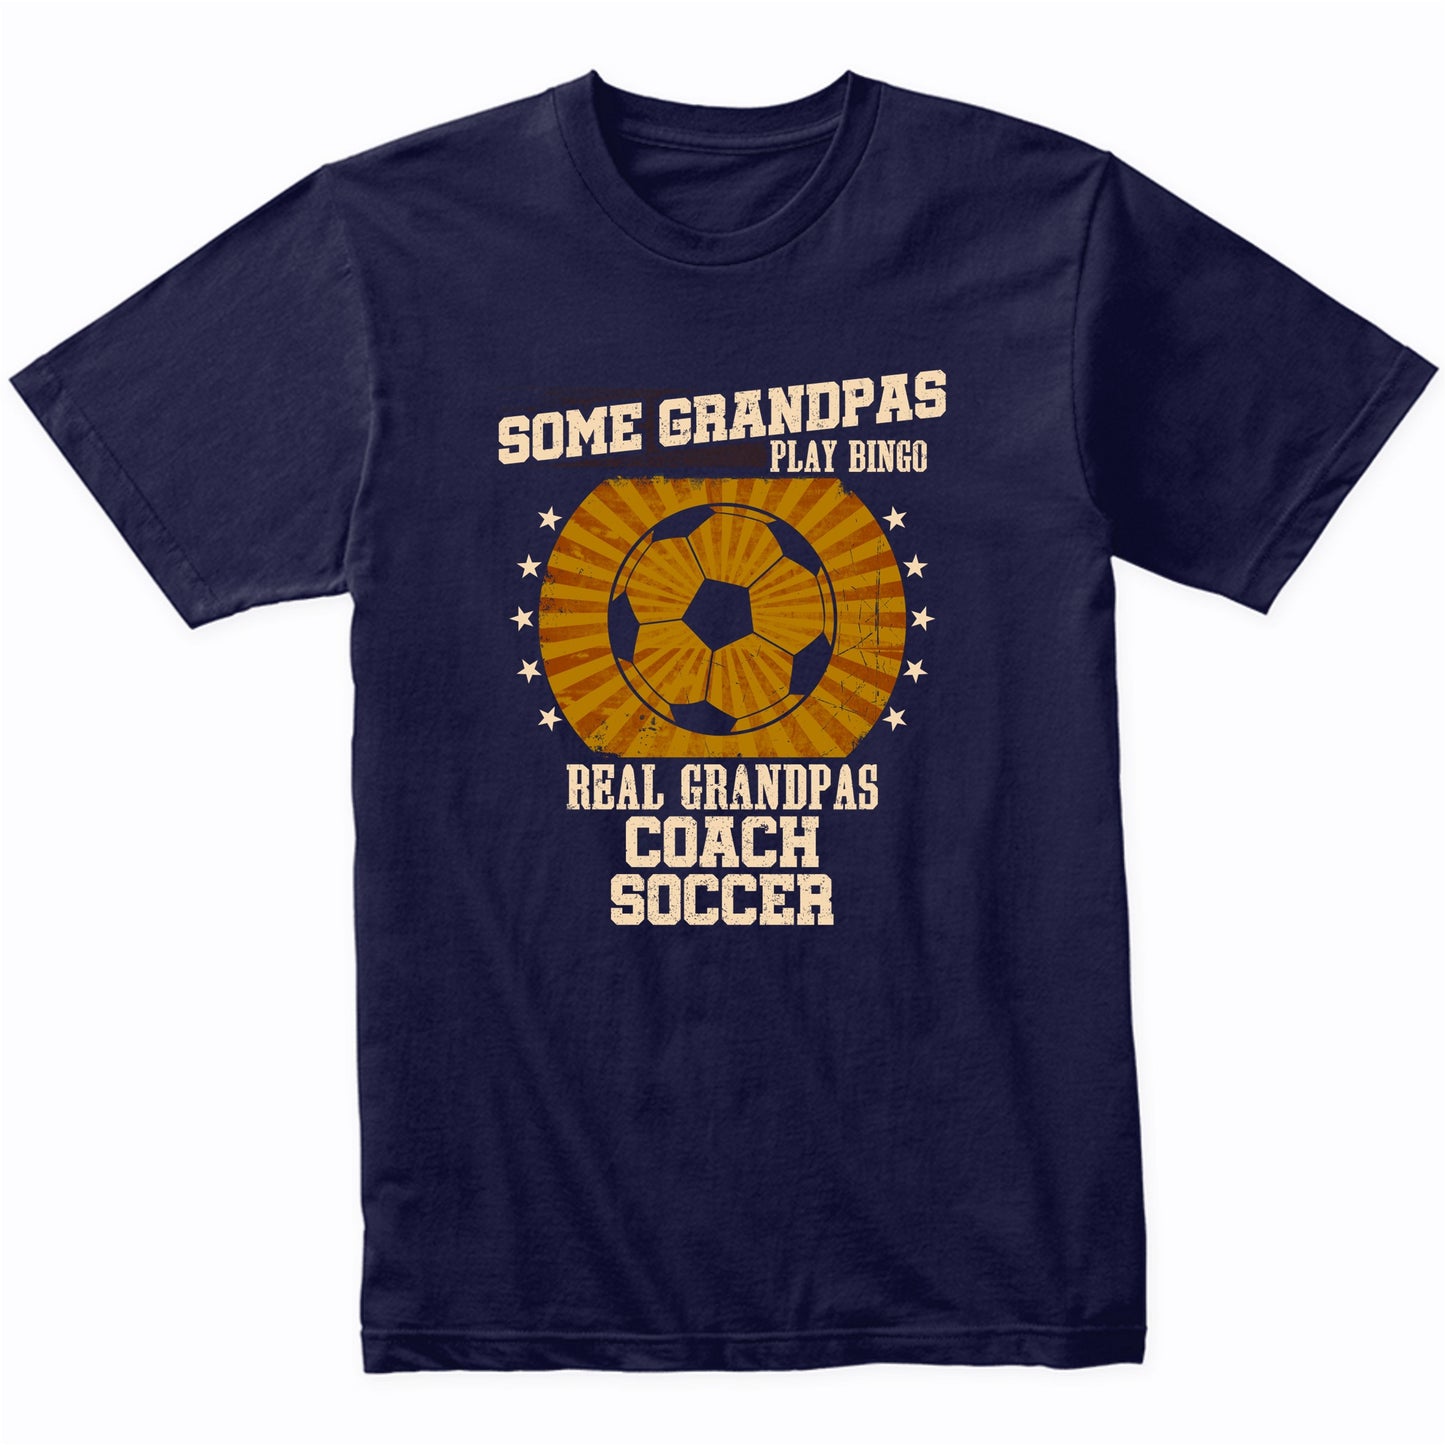 Soccer Grandpa Shirt - Real Grandpas Coach Soccer T-Shirt